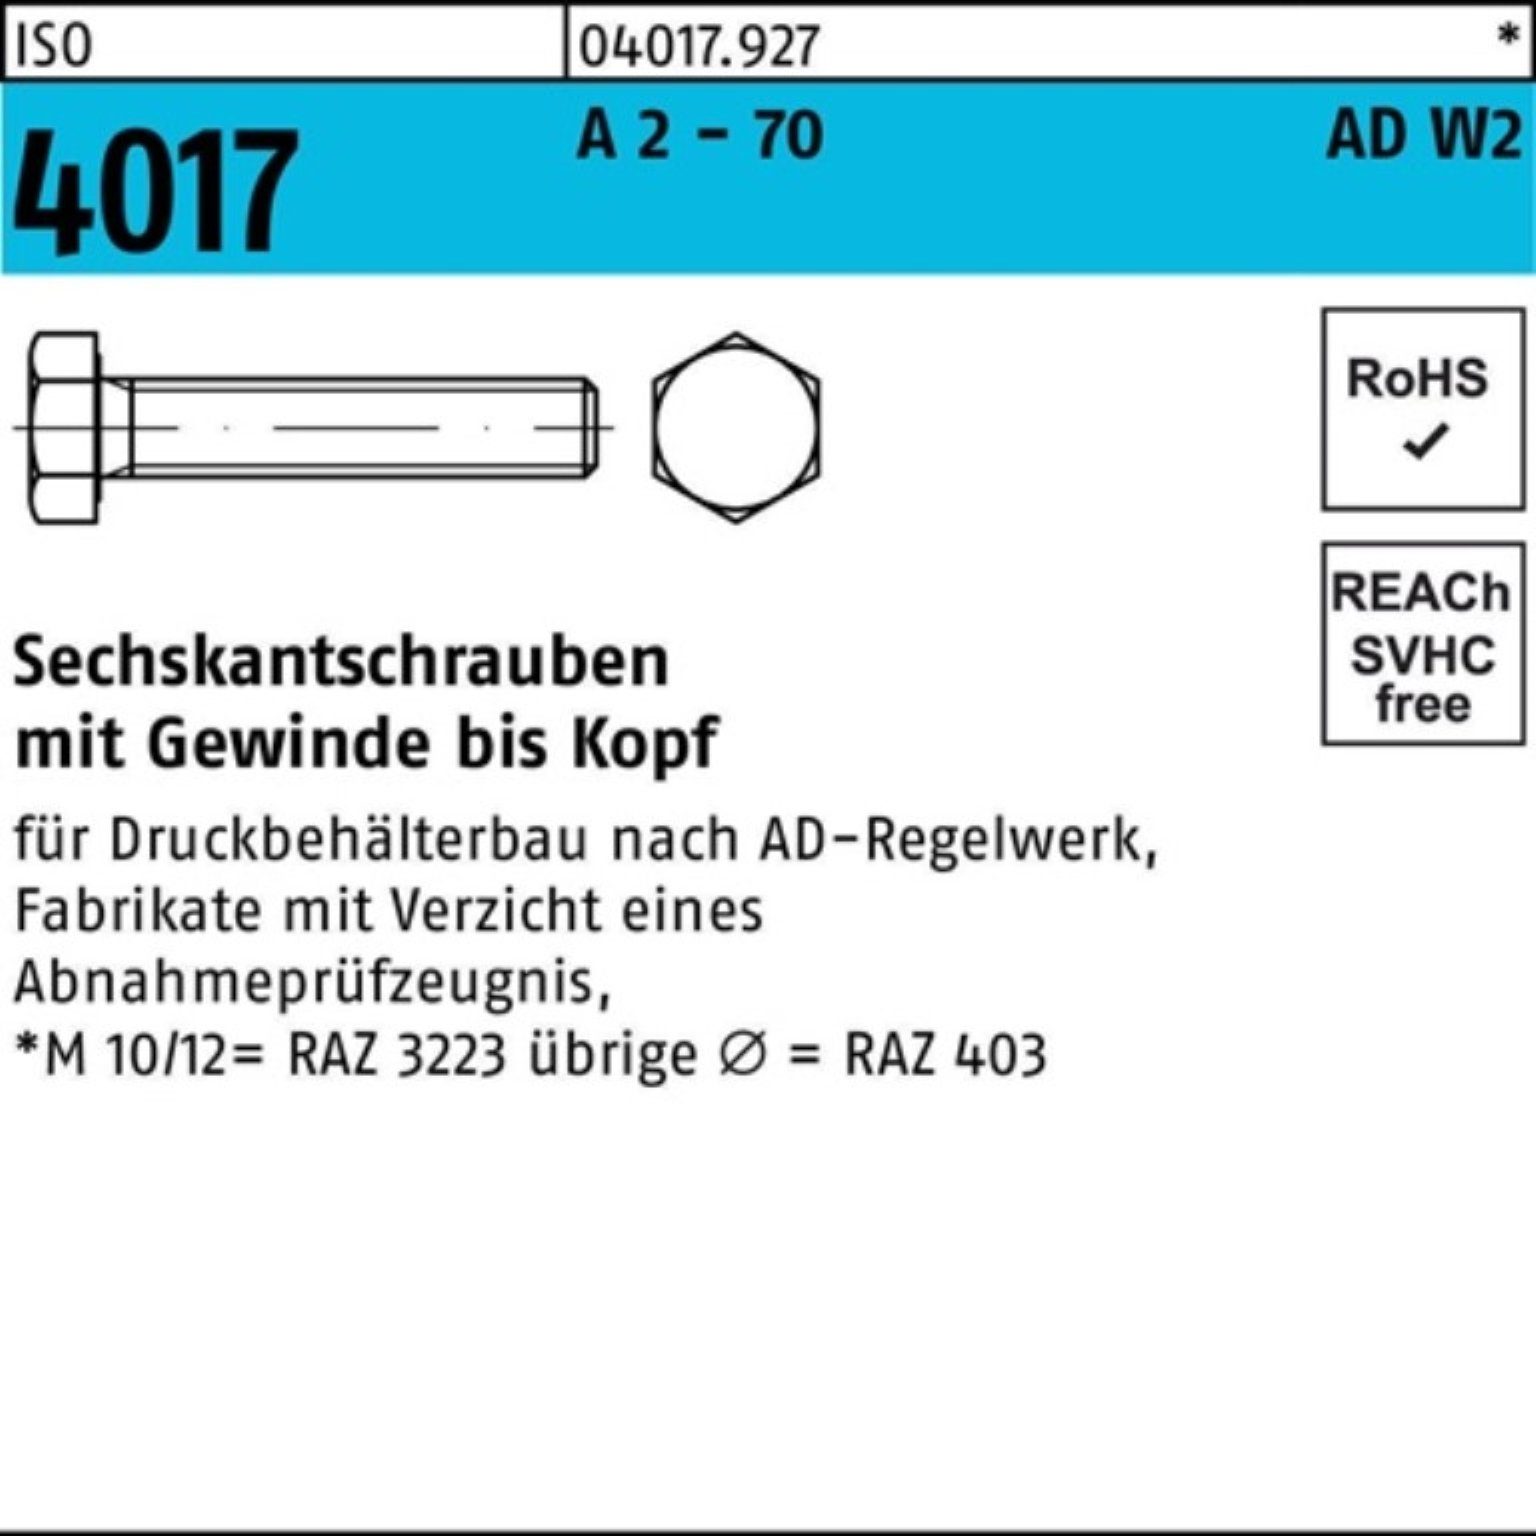 Bufab Sechskantschraube 100er Pack Sechskantschraube ISO 4017 VG M12x 40 A 2 - 70 AD-W2 50 St